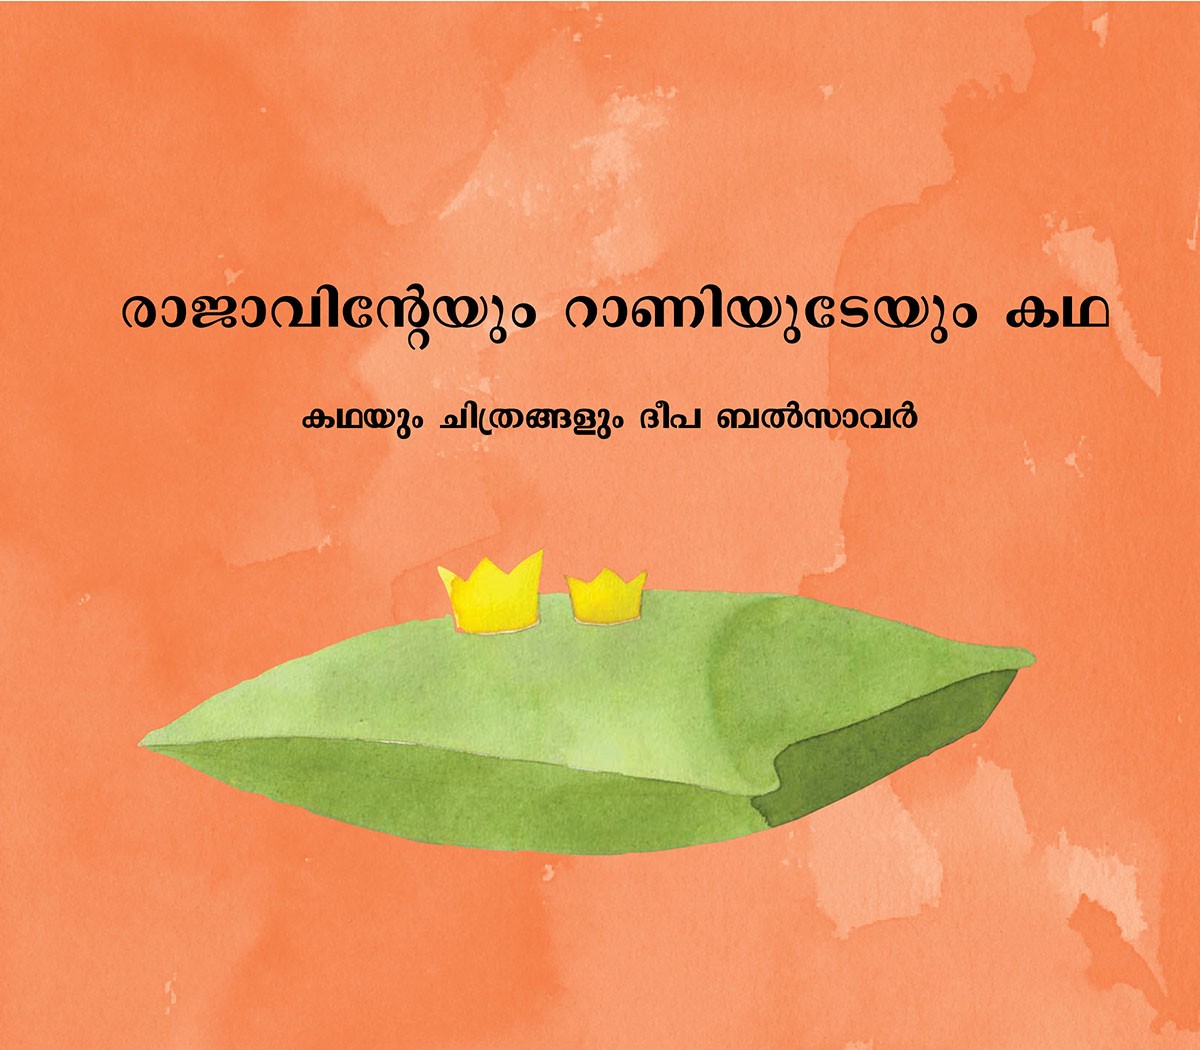 The Lonely King And Queen/Rajavindaiyum-Raniudaiyum Katha (Malayalam)